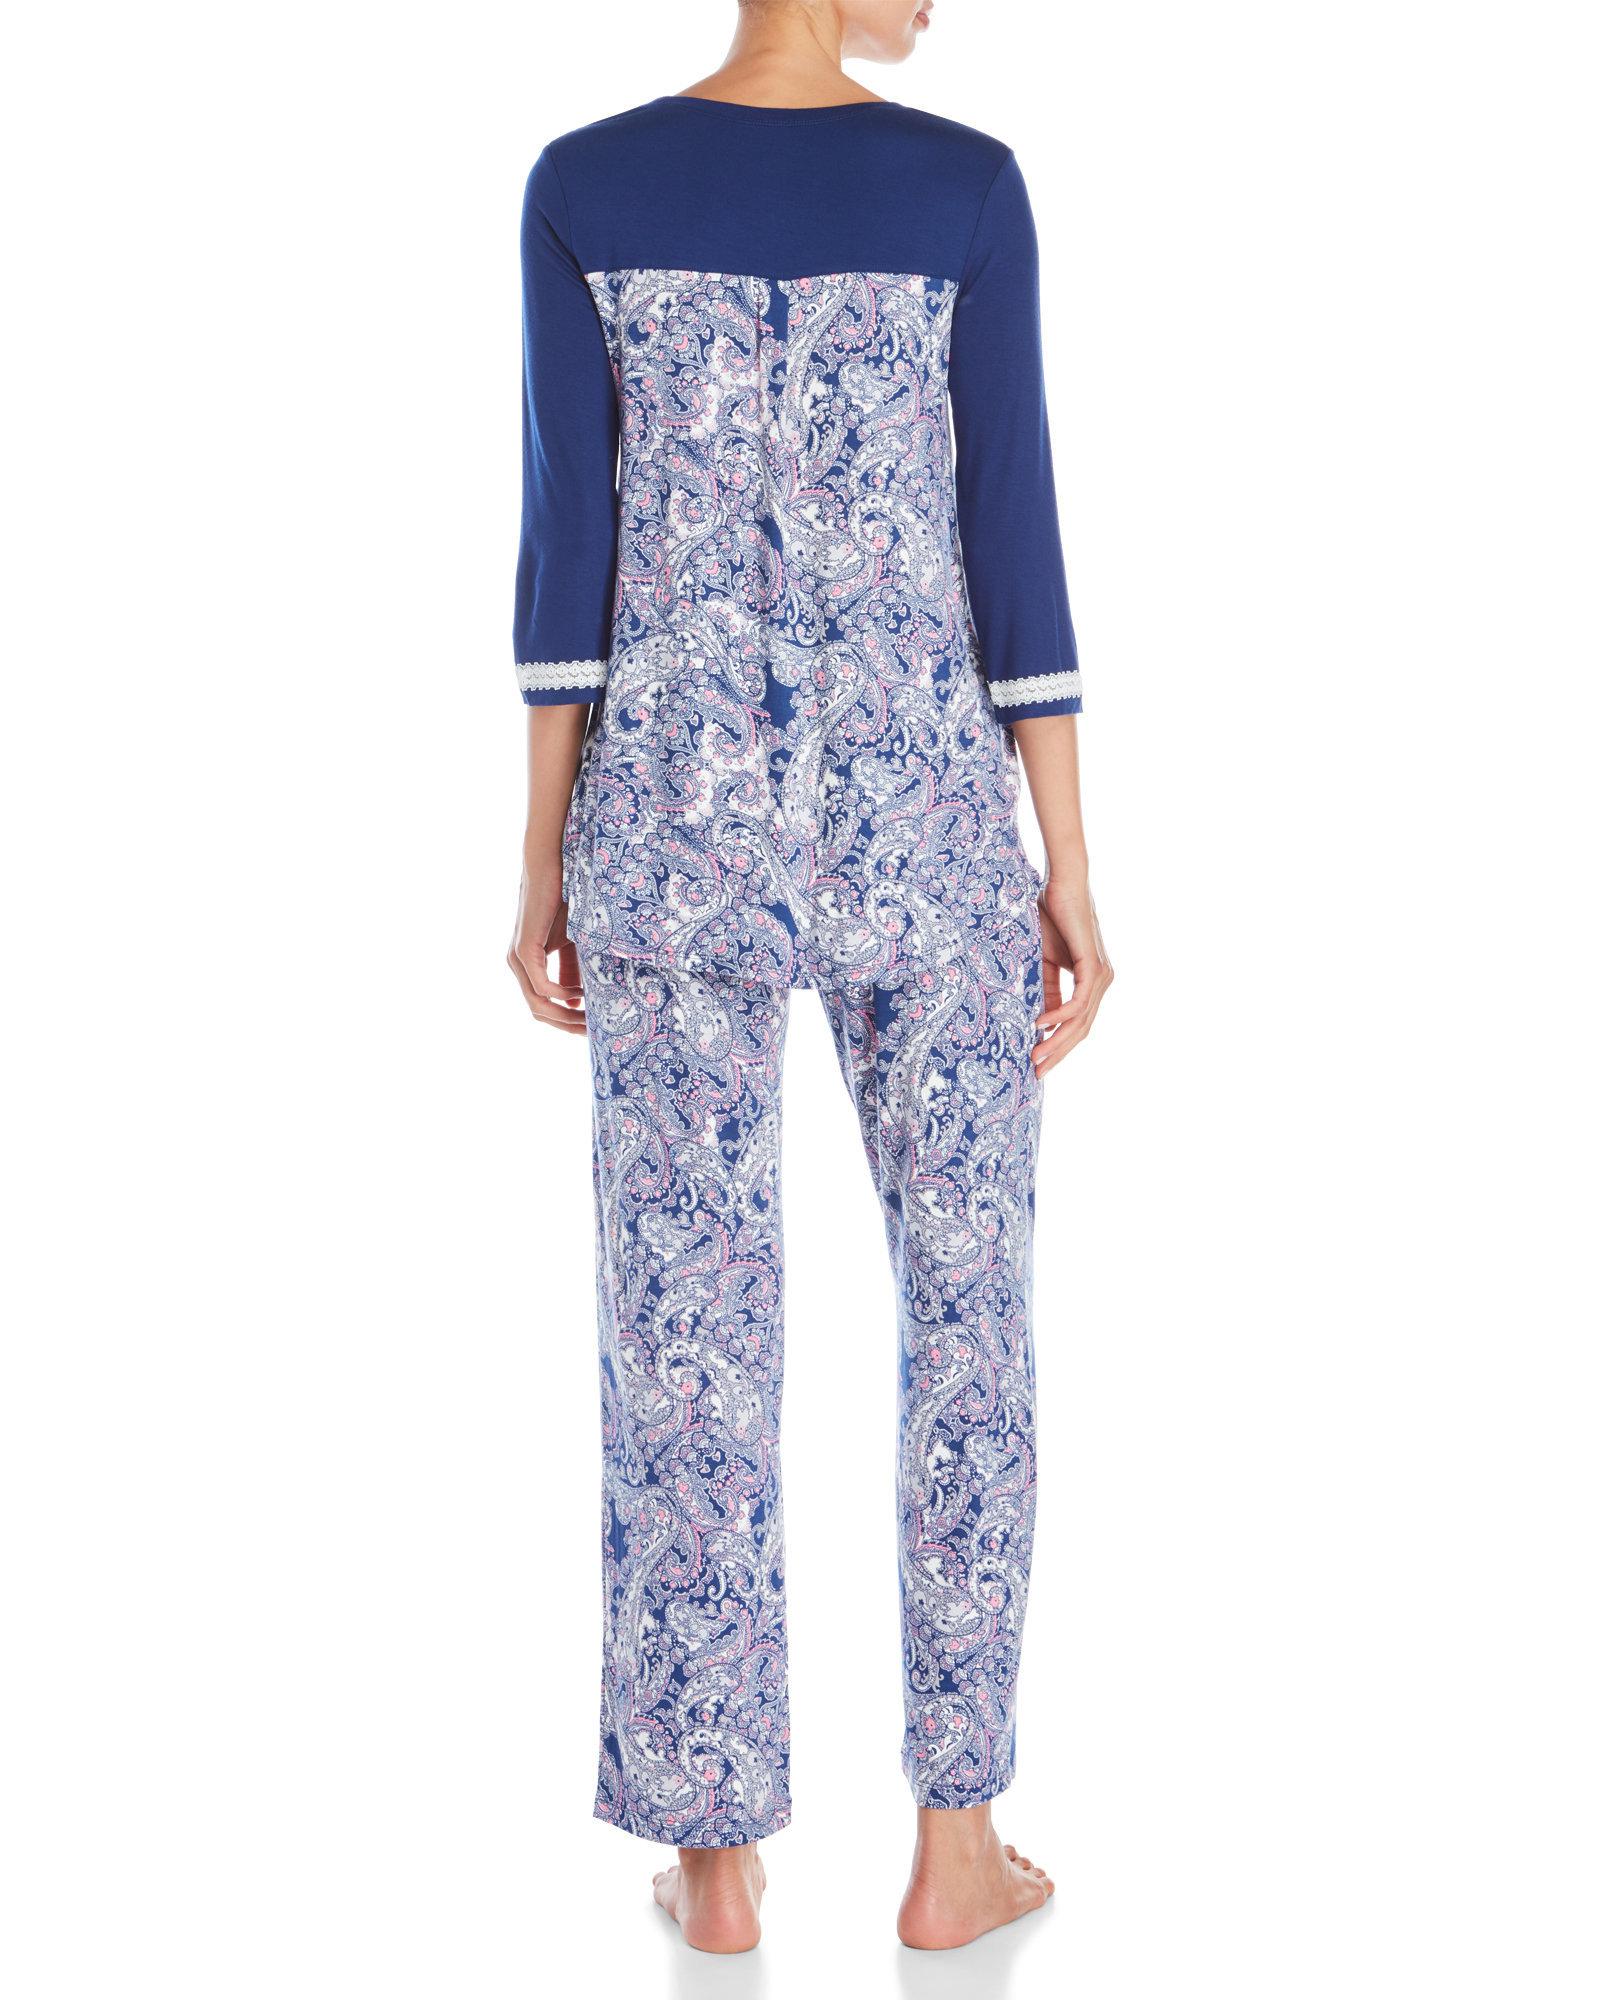 Ellen Tracy Synthetic Three Quarter Sleeve Pajama Set in Blue - Lyst